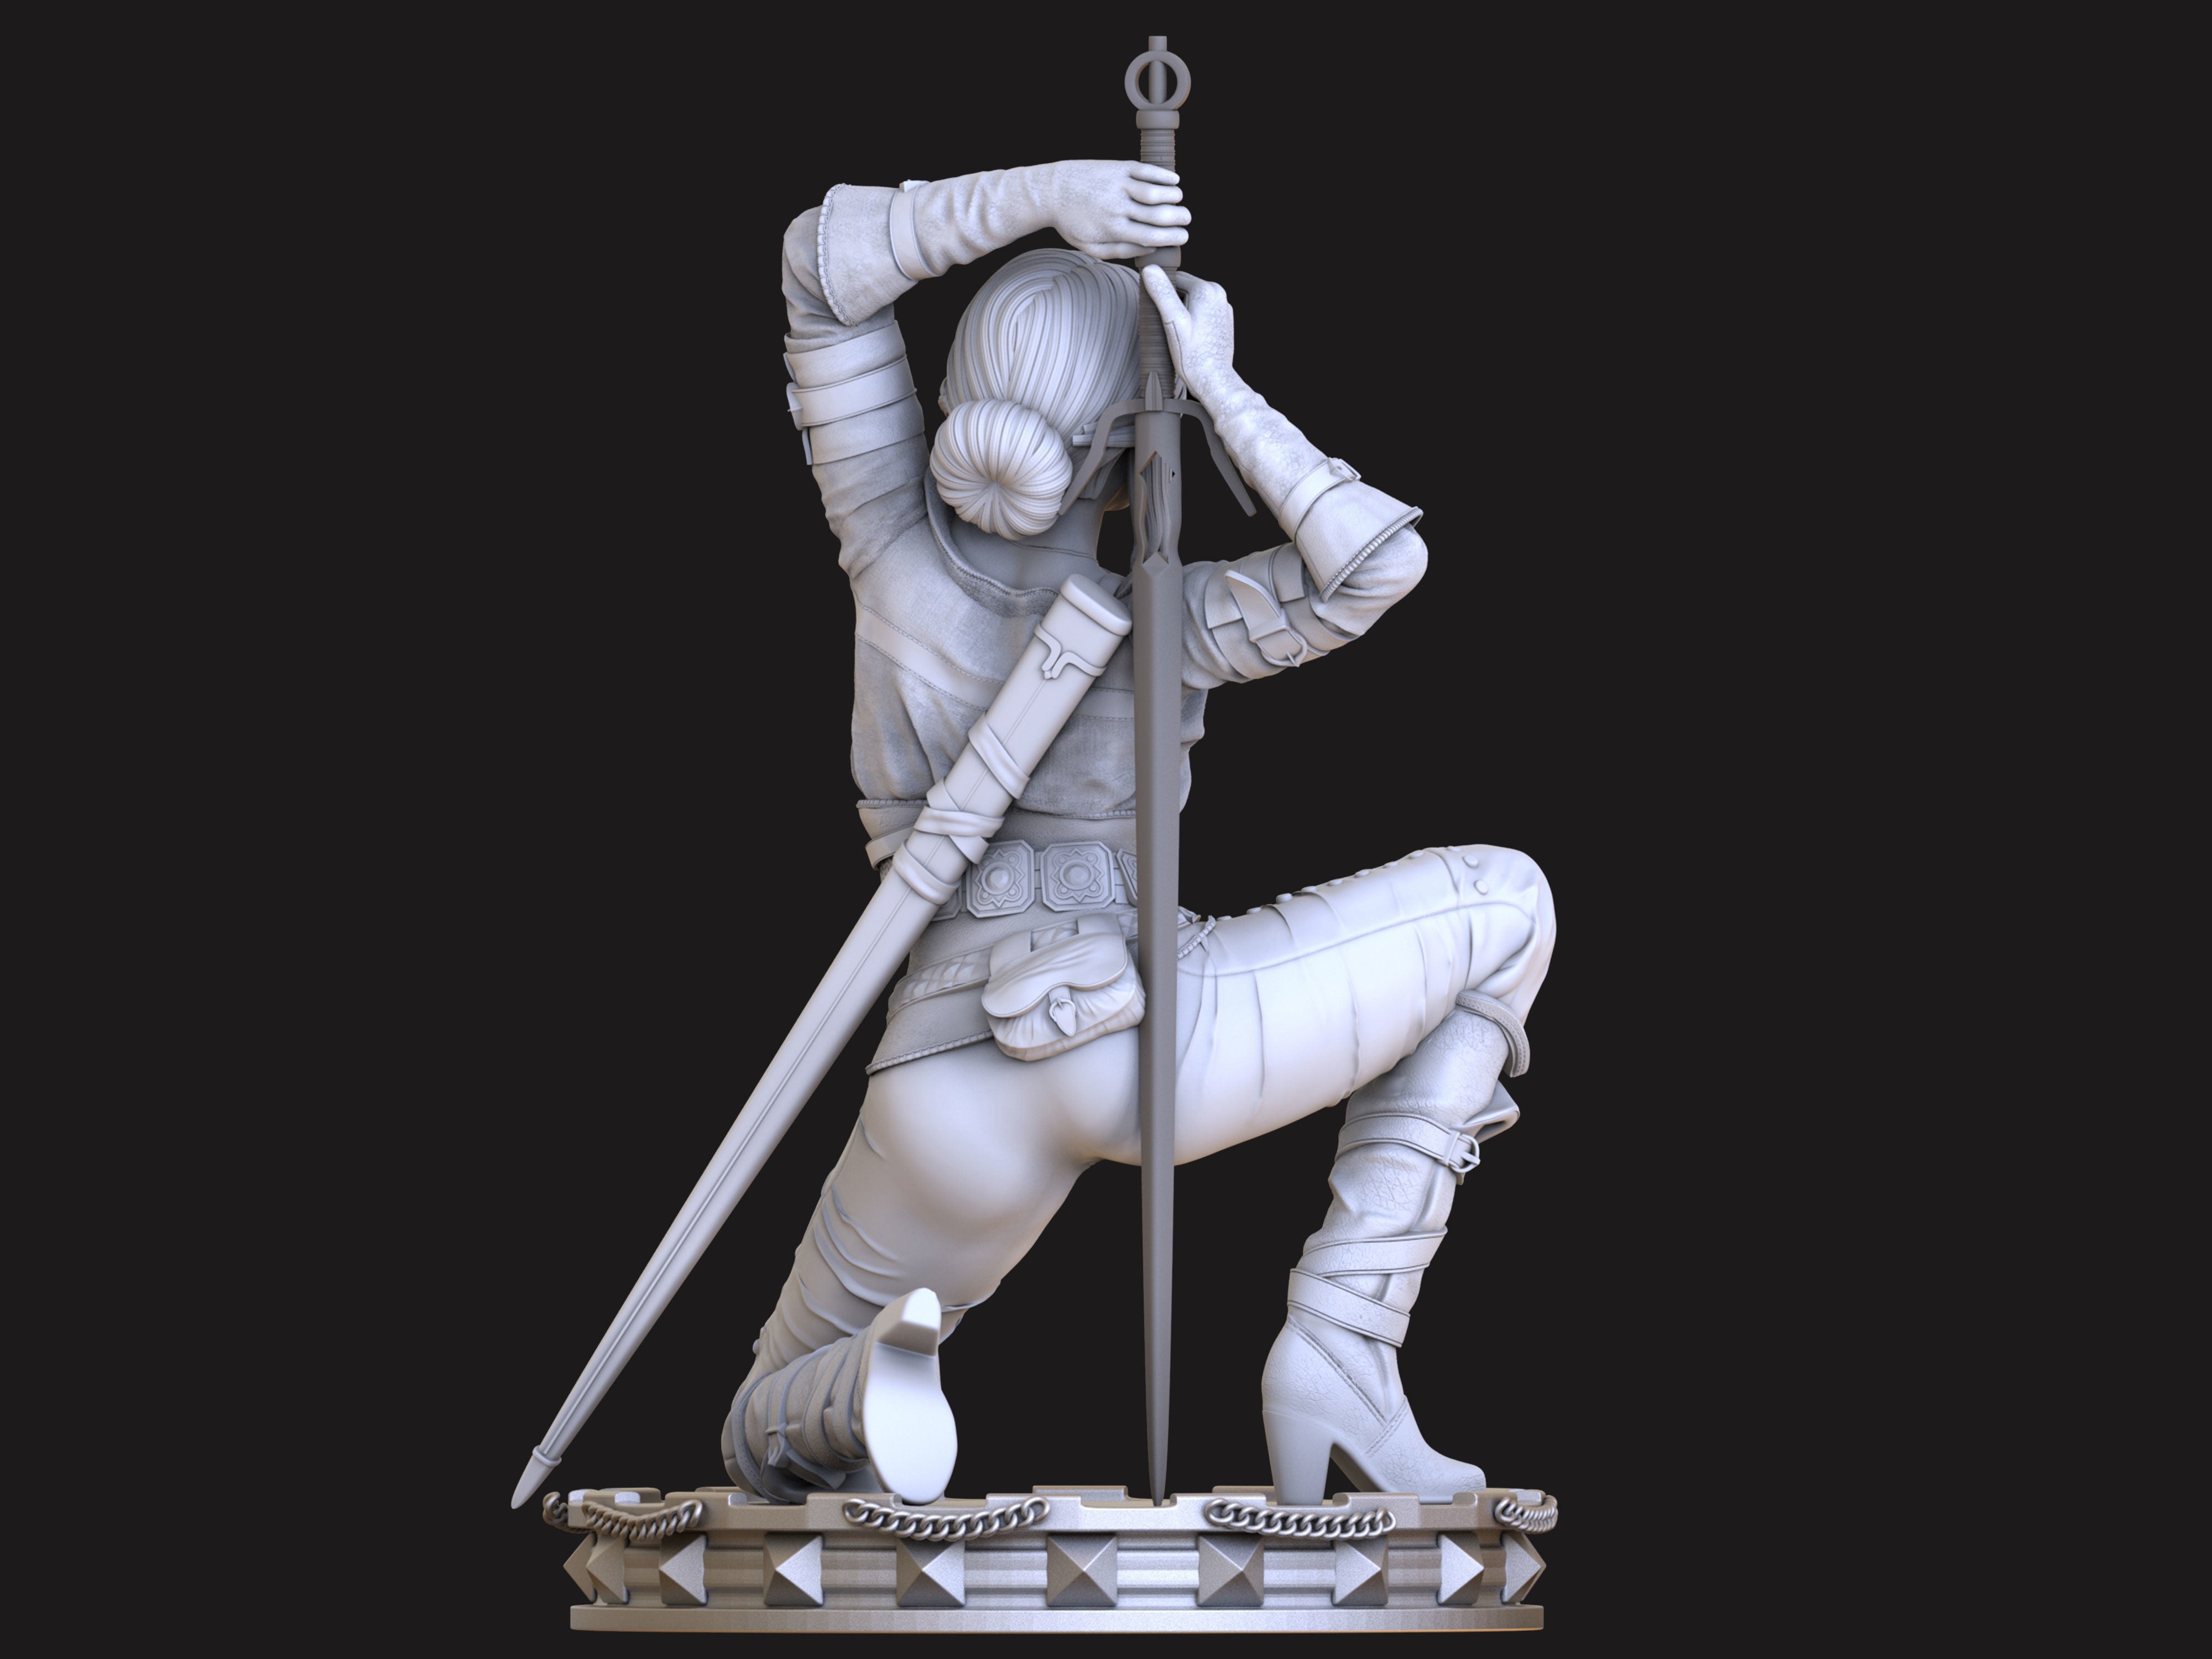 Ciri the Witcher 3D Print model - Fan Art, SFW/NSFW 75mm or 180mm